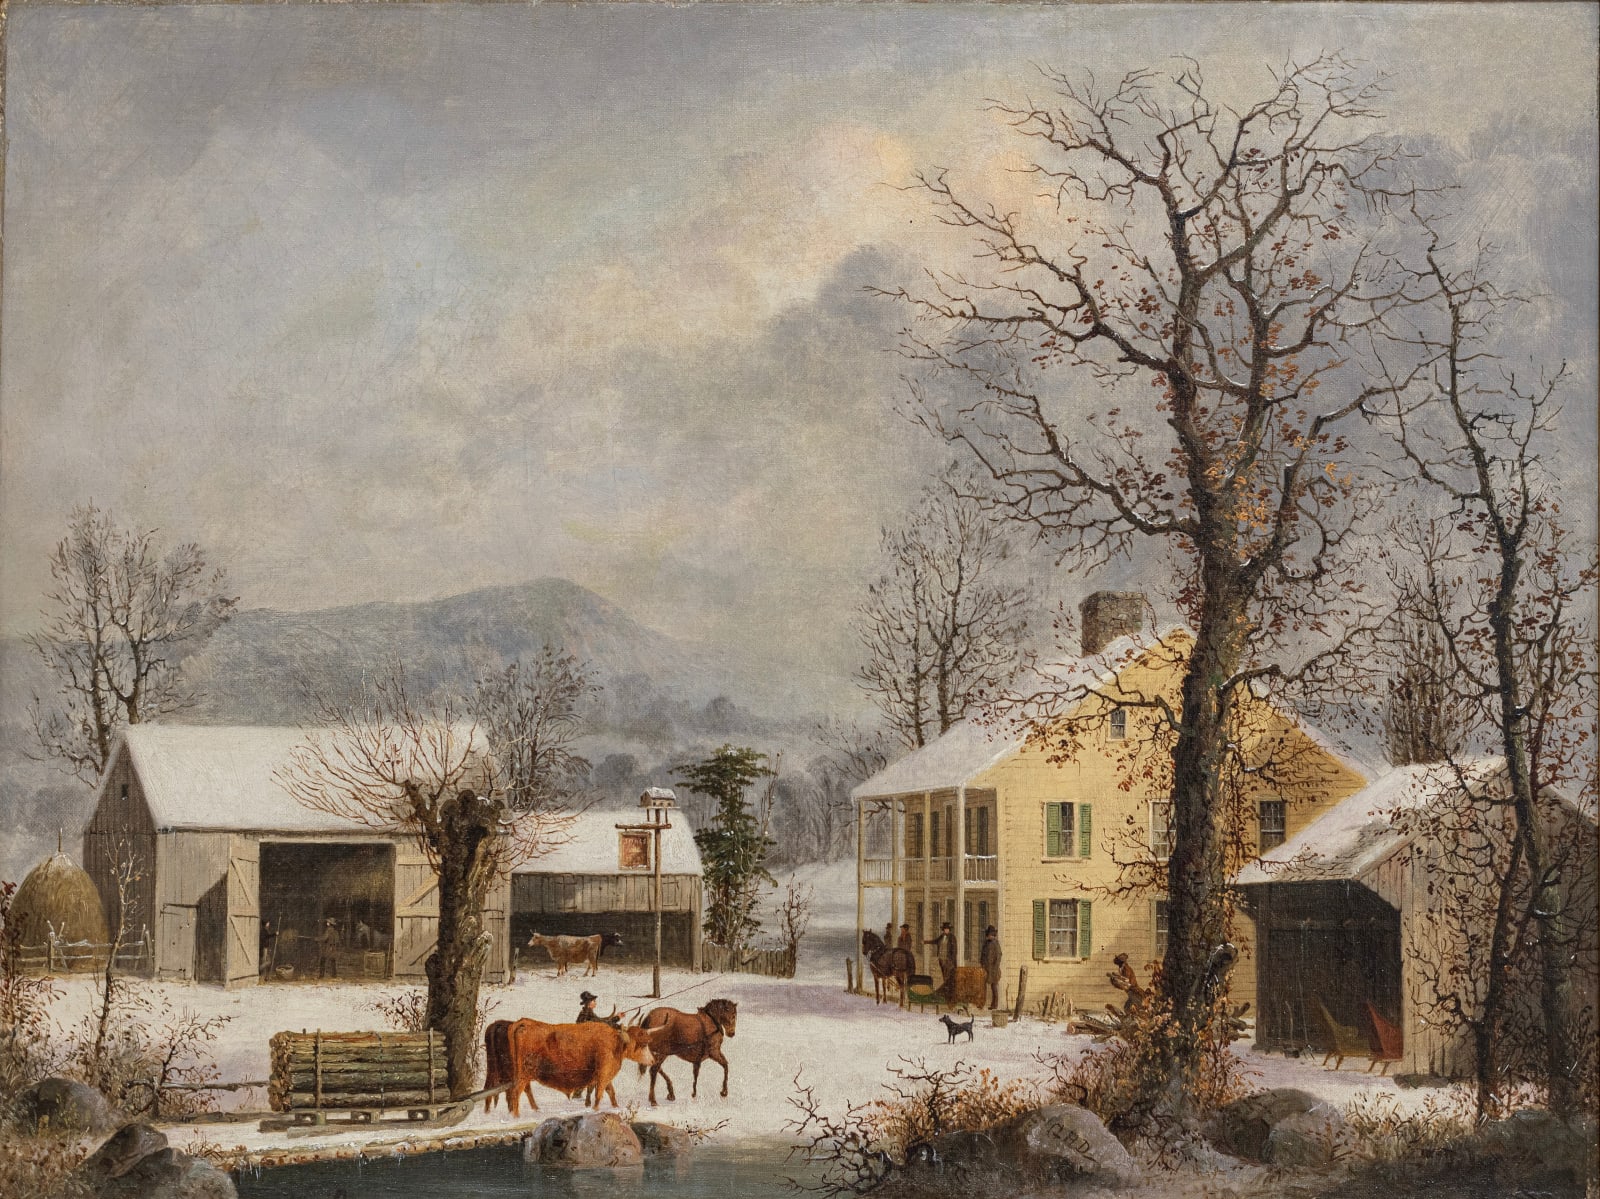 George Henry Durrie, Winter-time at Jones Inn, c. 1857-63